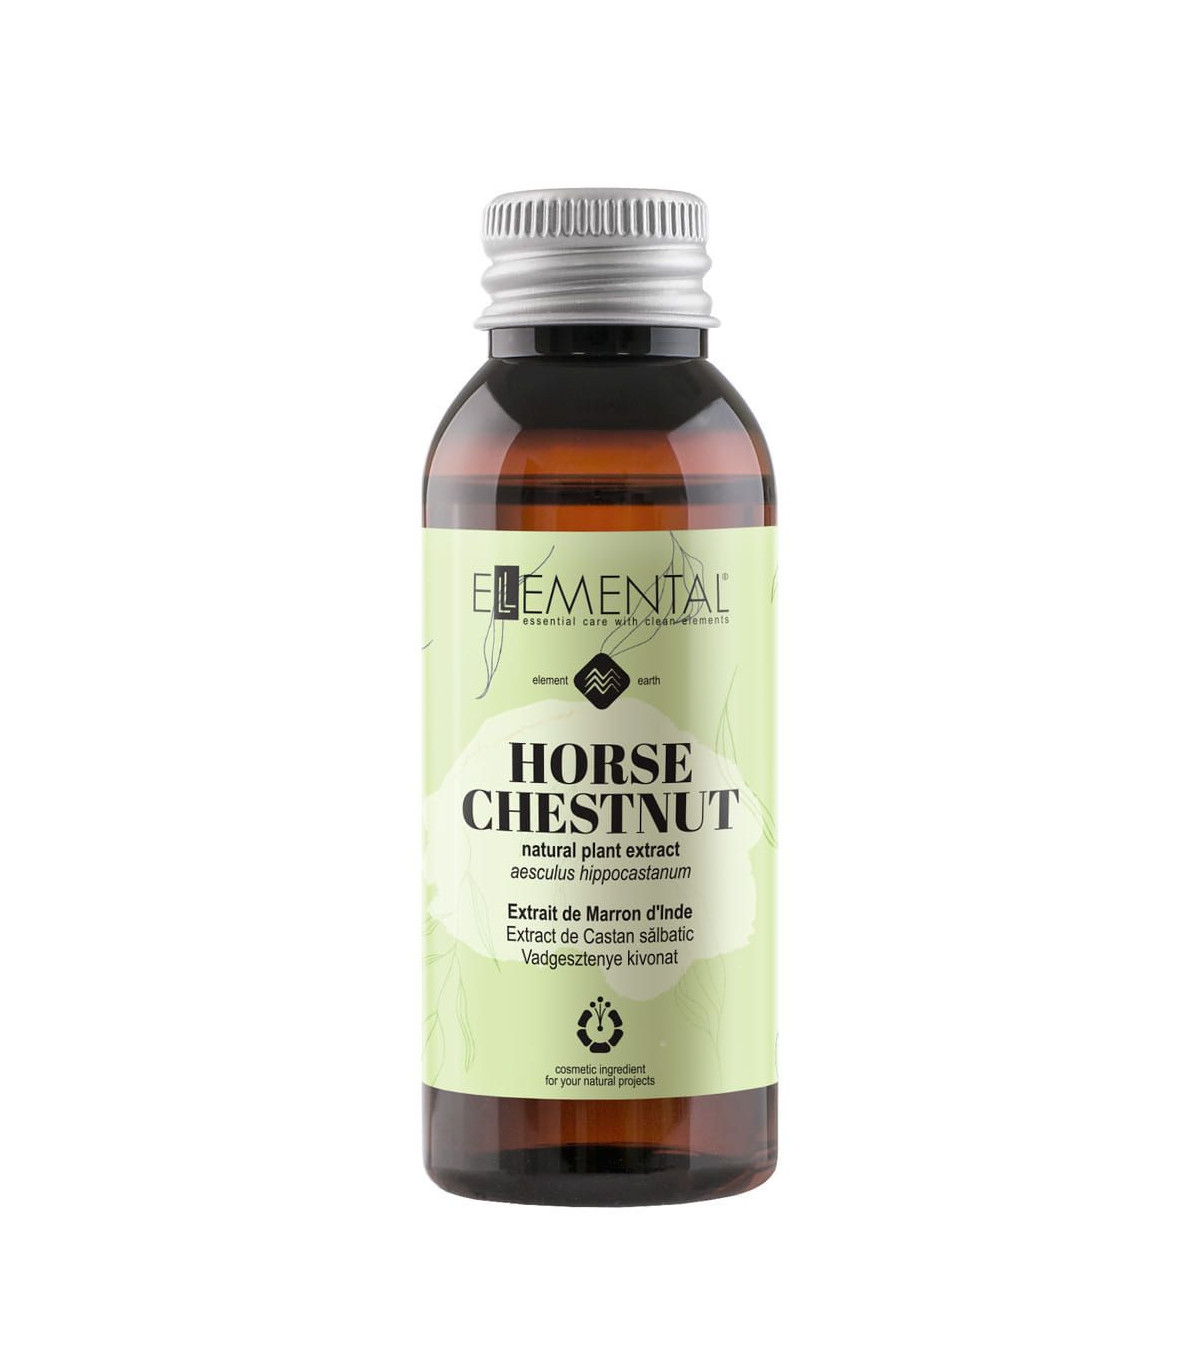 Horse Chestnut extract